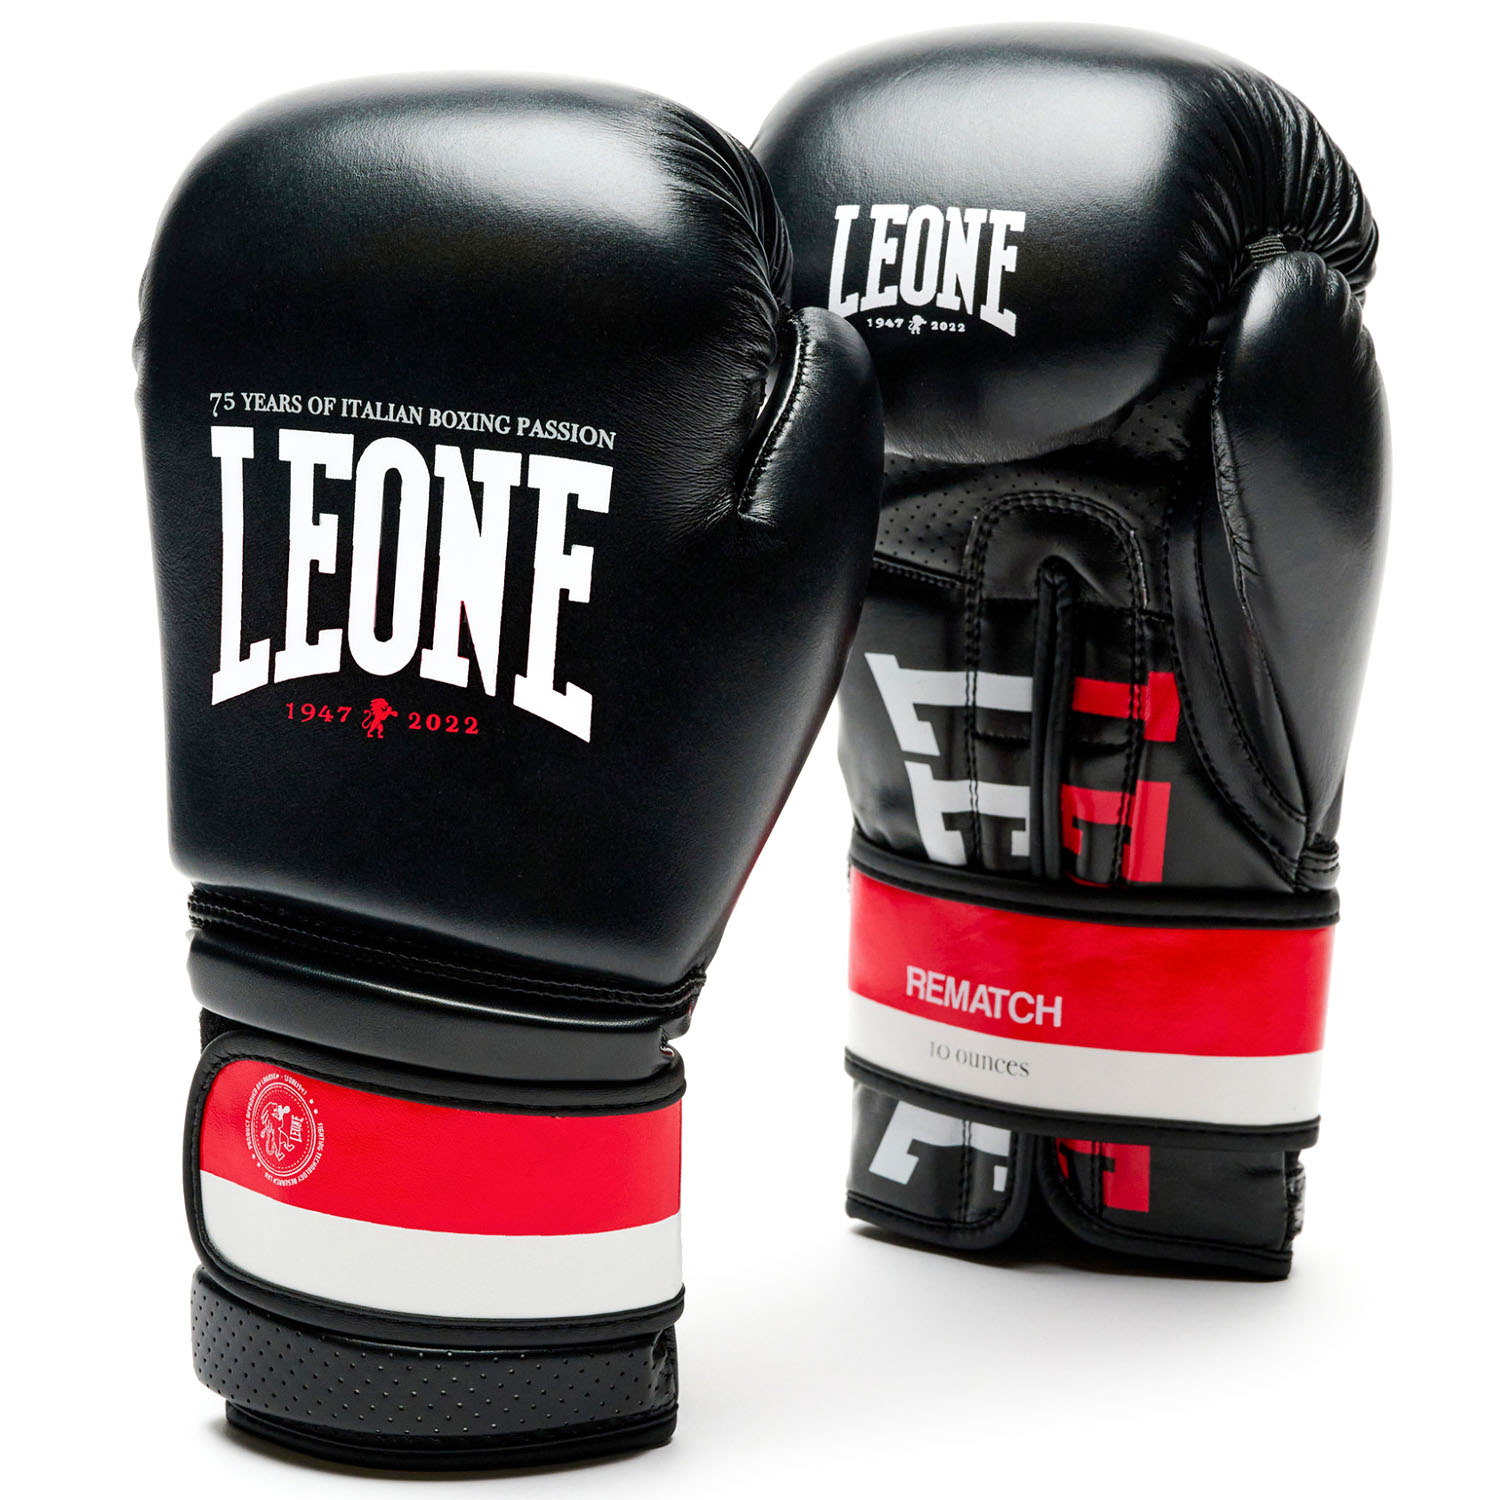 LEONE Boxing Gloves, Rematch, GN332,, black